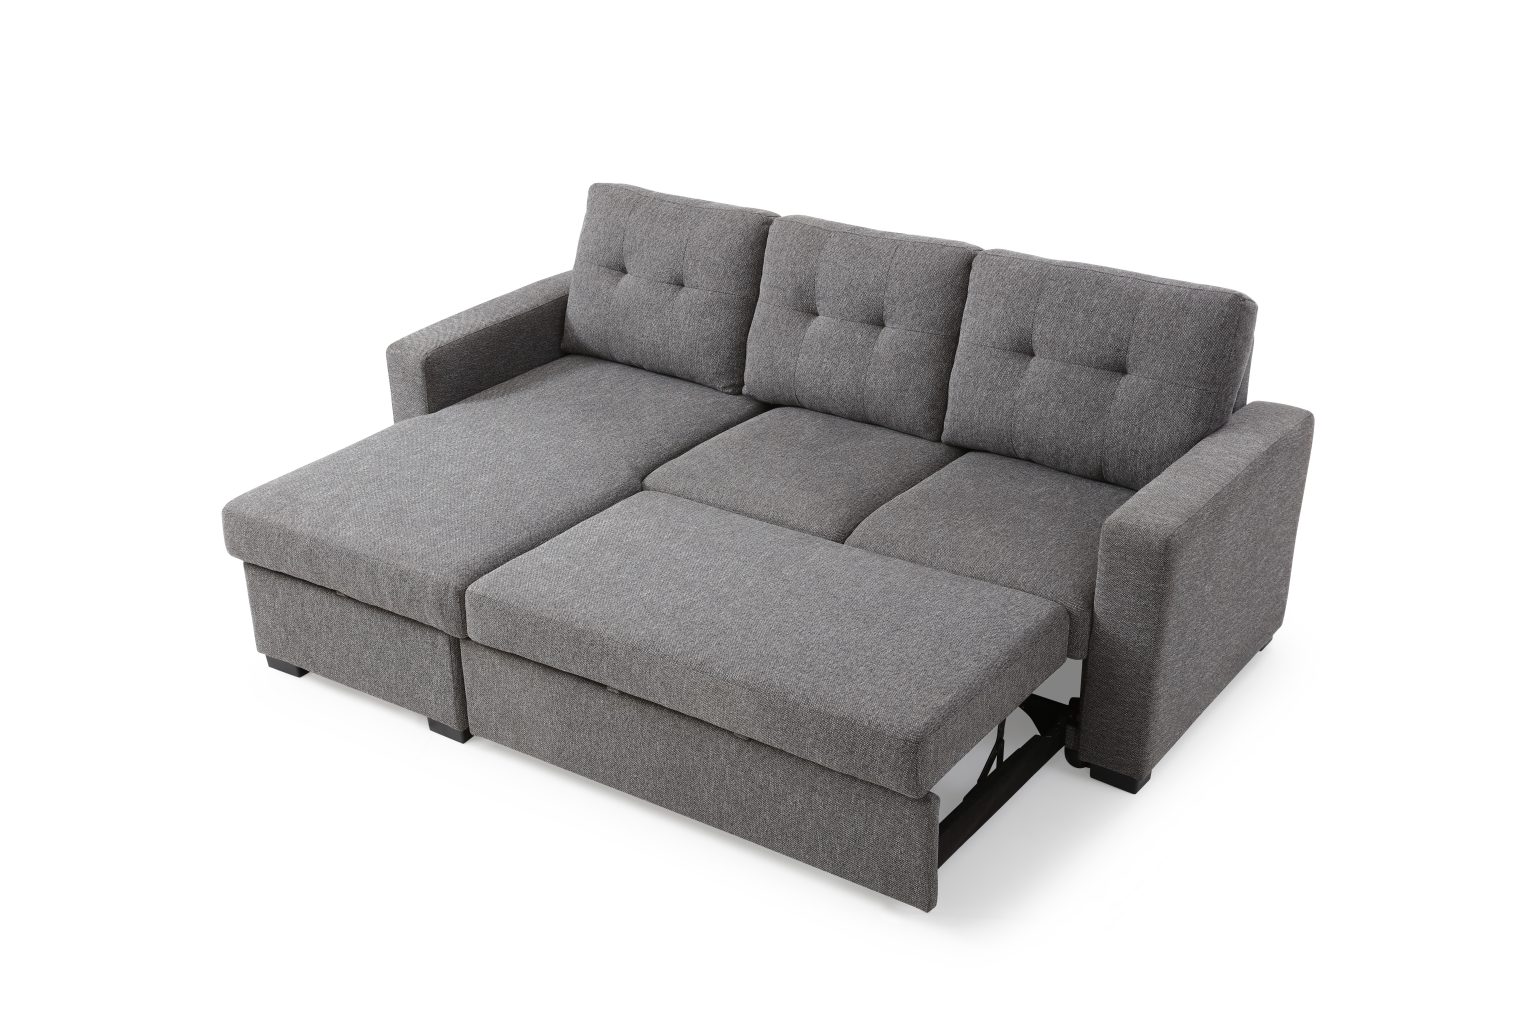 classic corner sofa beds